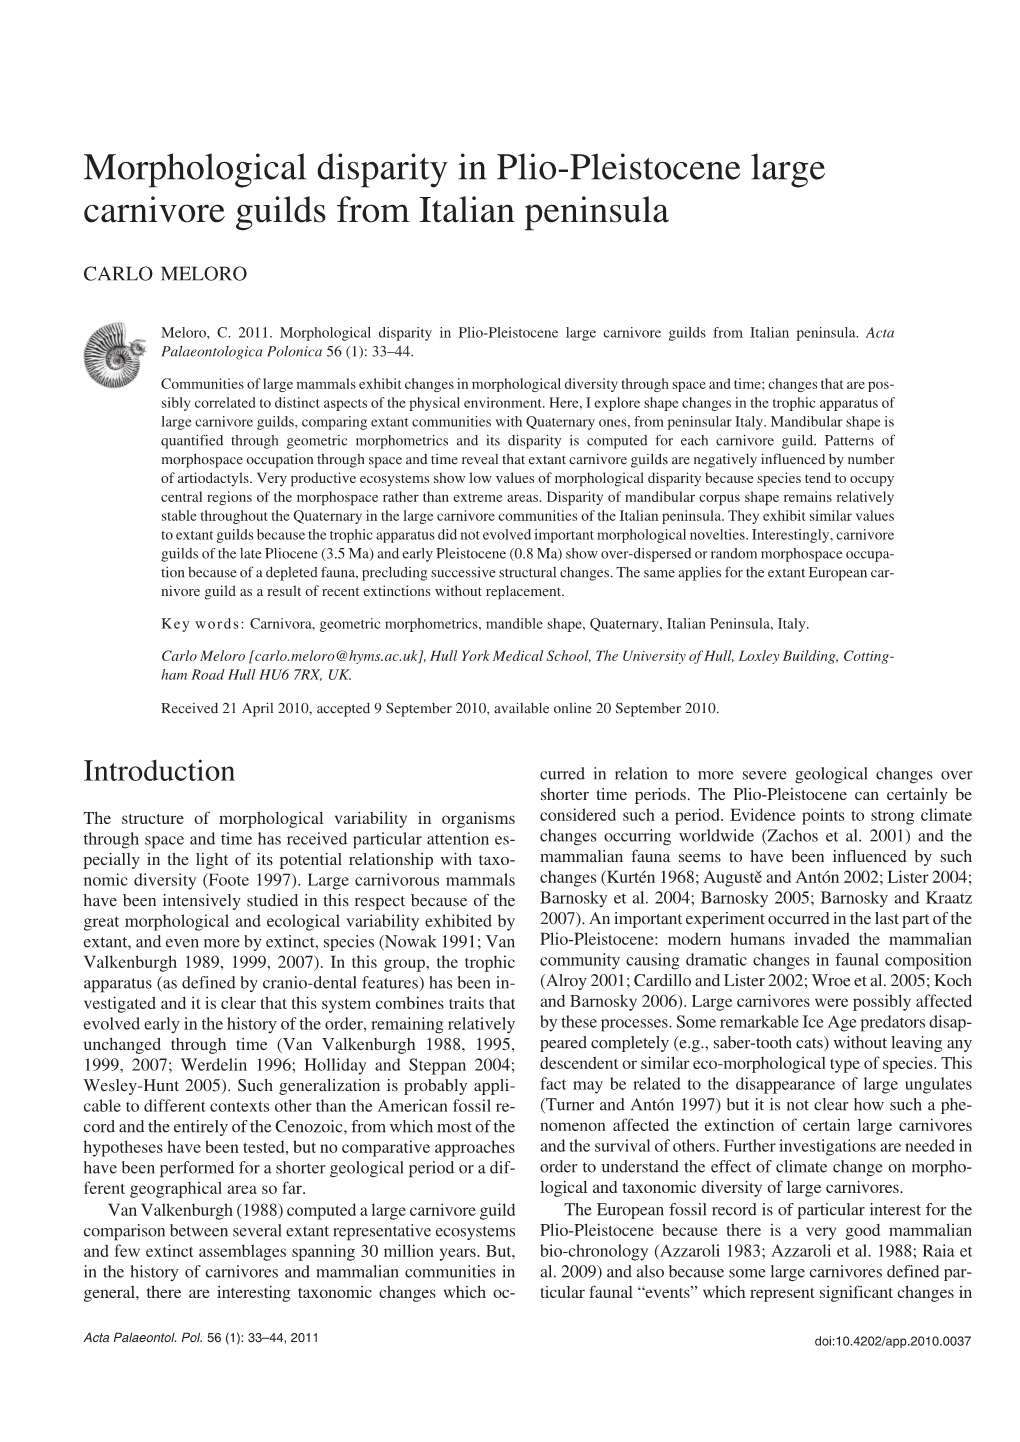 Morphological Disparity in Plio−Pleistocene Large Carnivore Guilds from Italian Peninsula